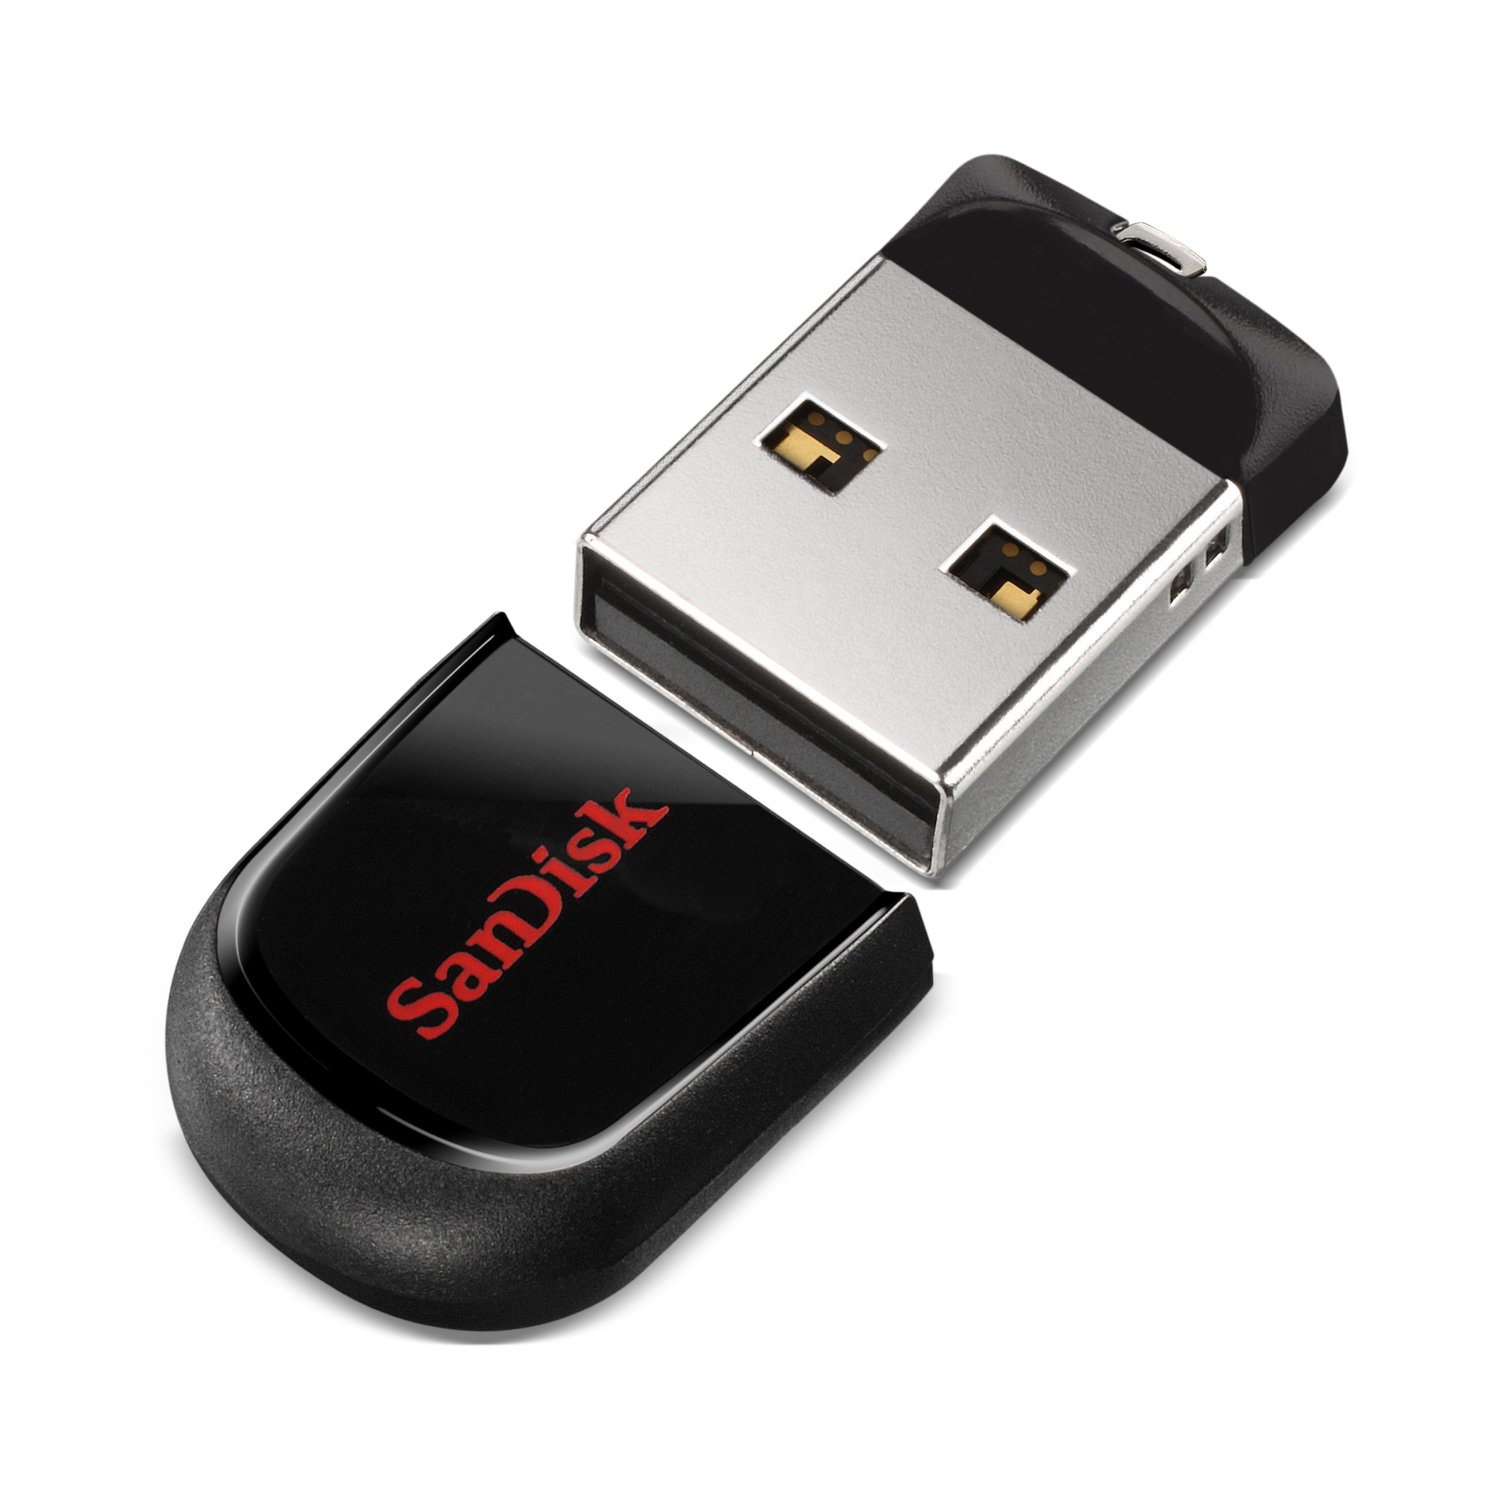 SanDisk Cruzer Fit CZ33 16GB USB 2.0